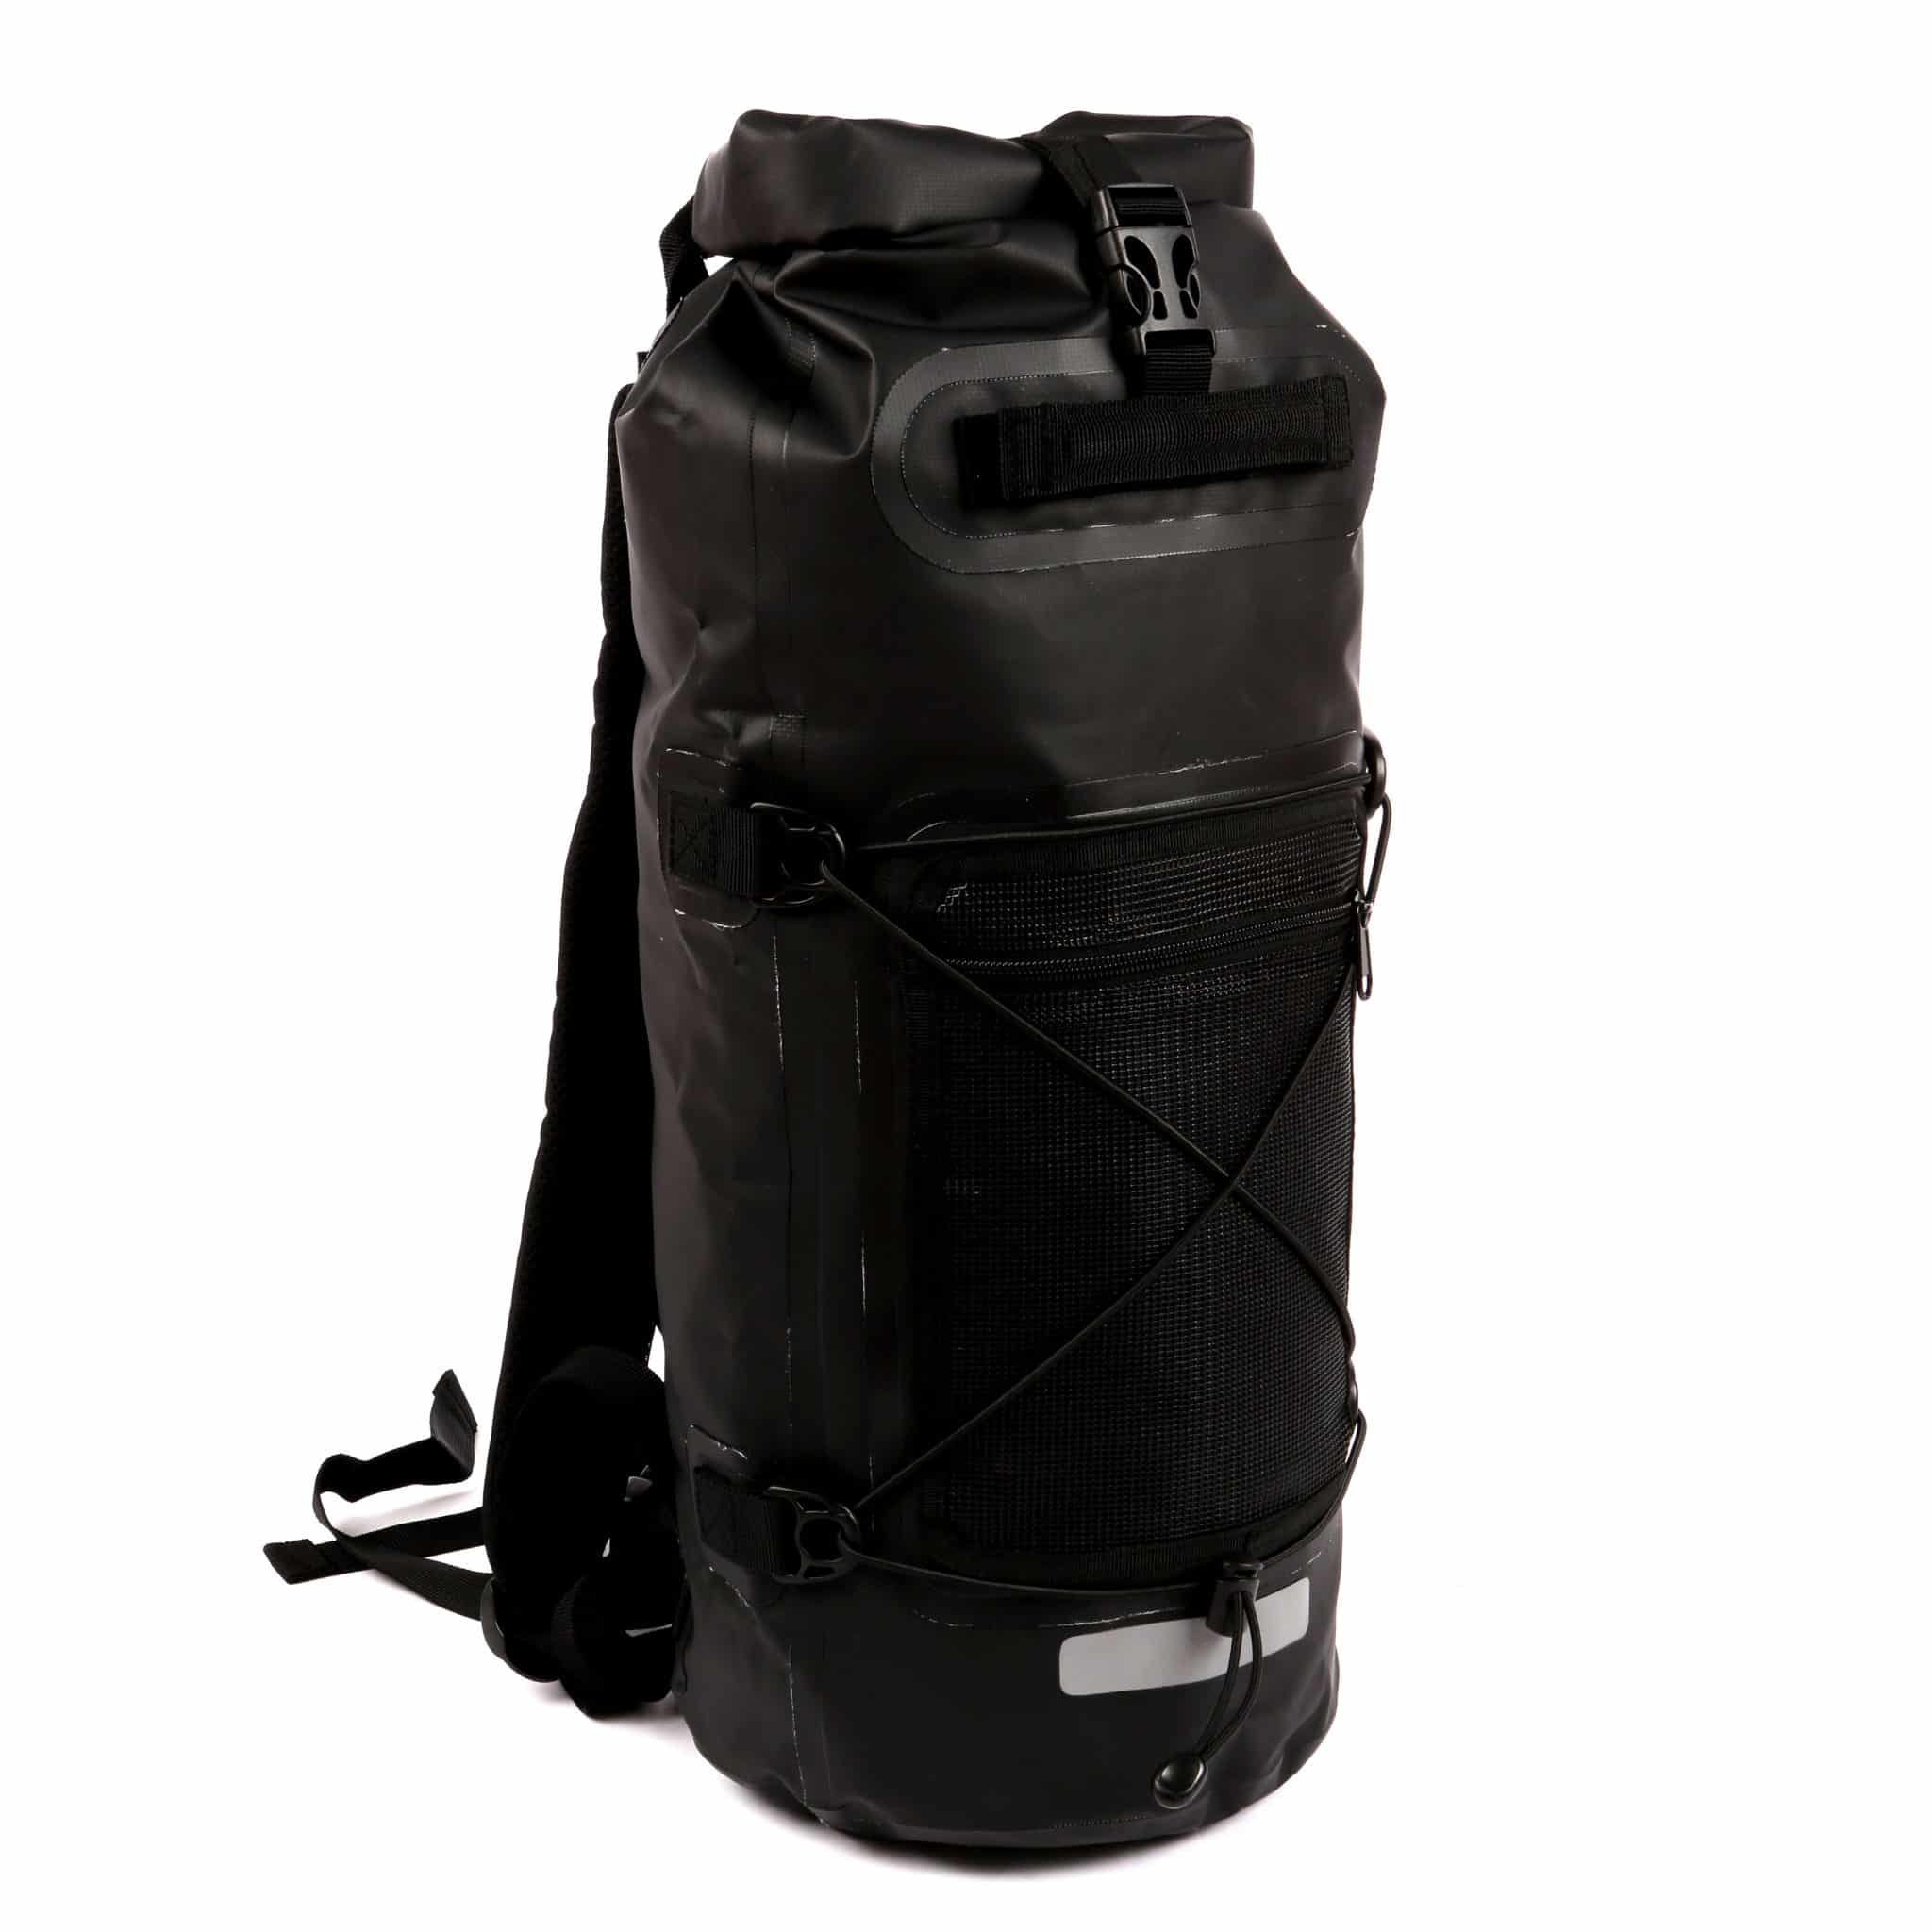 Dry Bag Backpack - Waterproof for Kayaking, Sailing, Camping - 28L